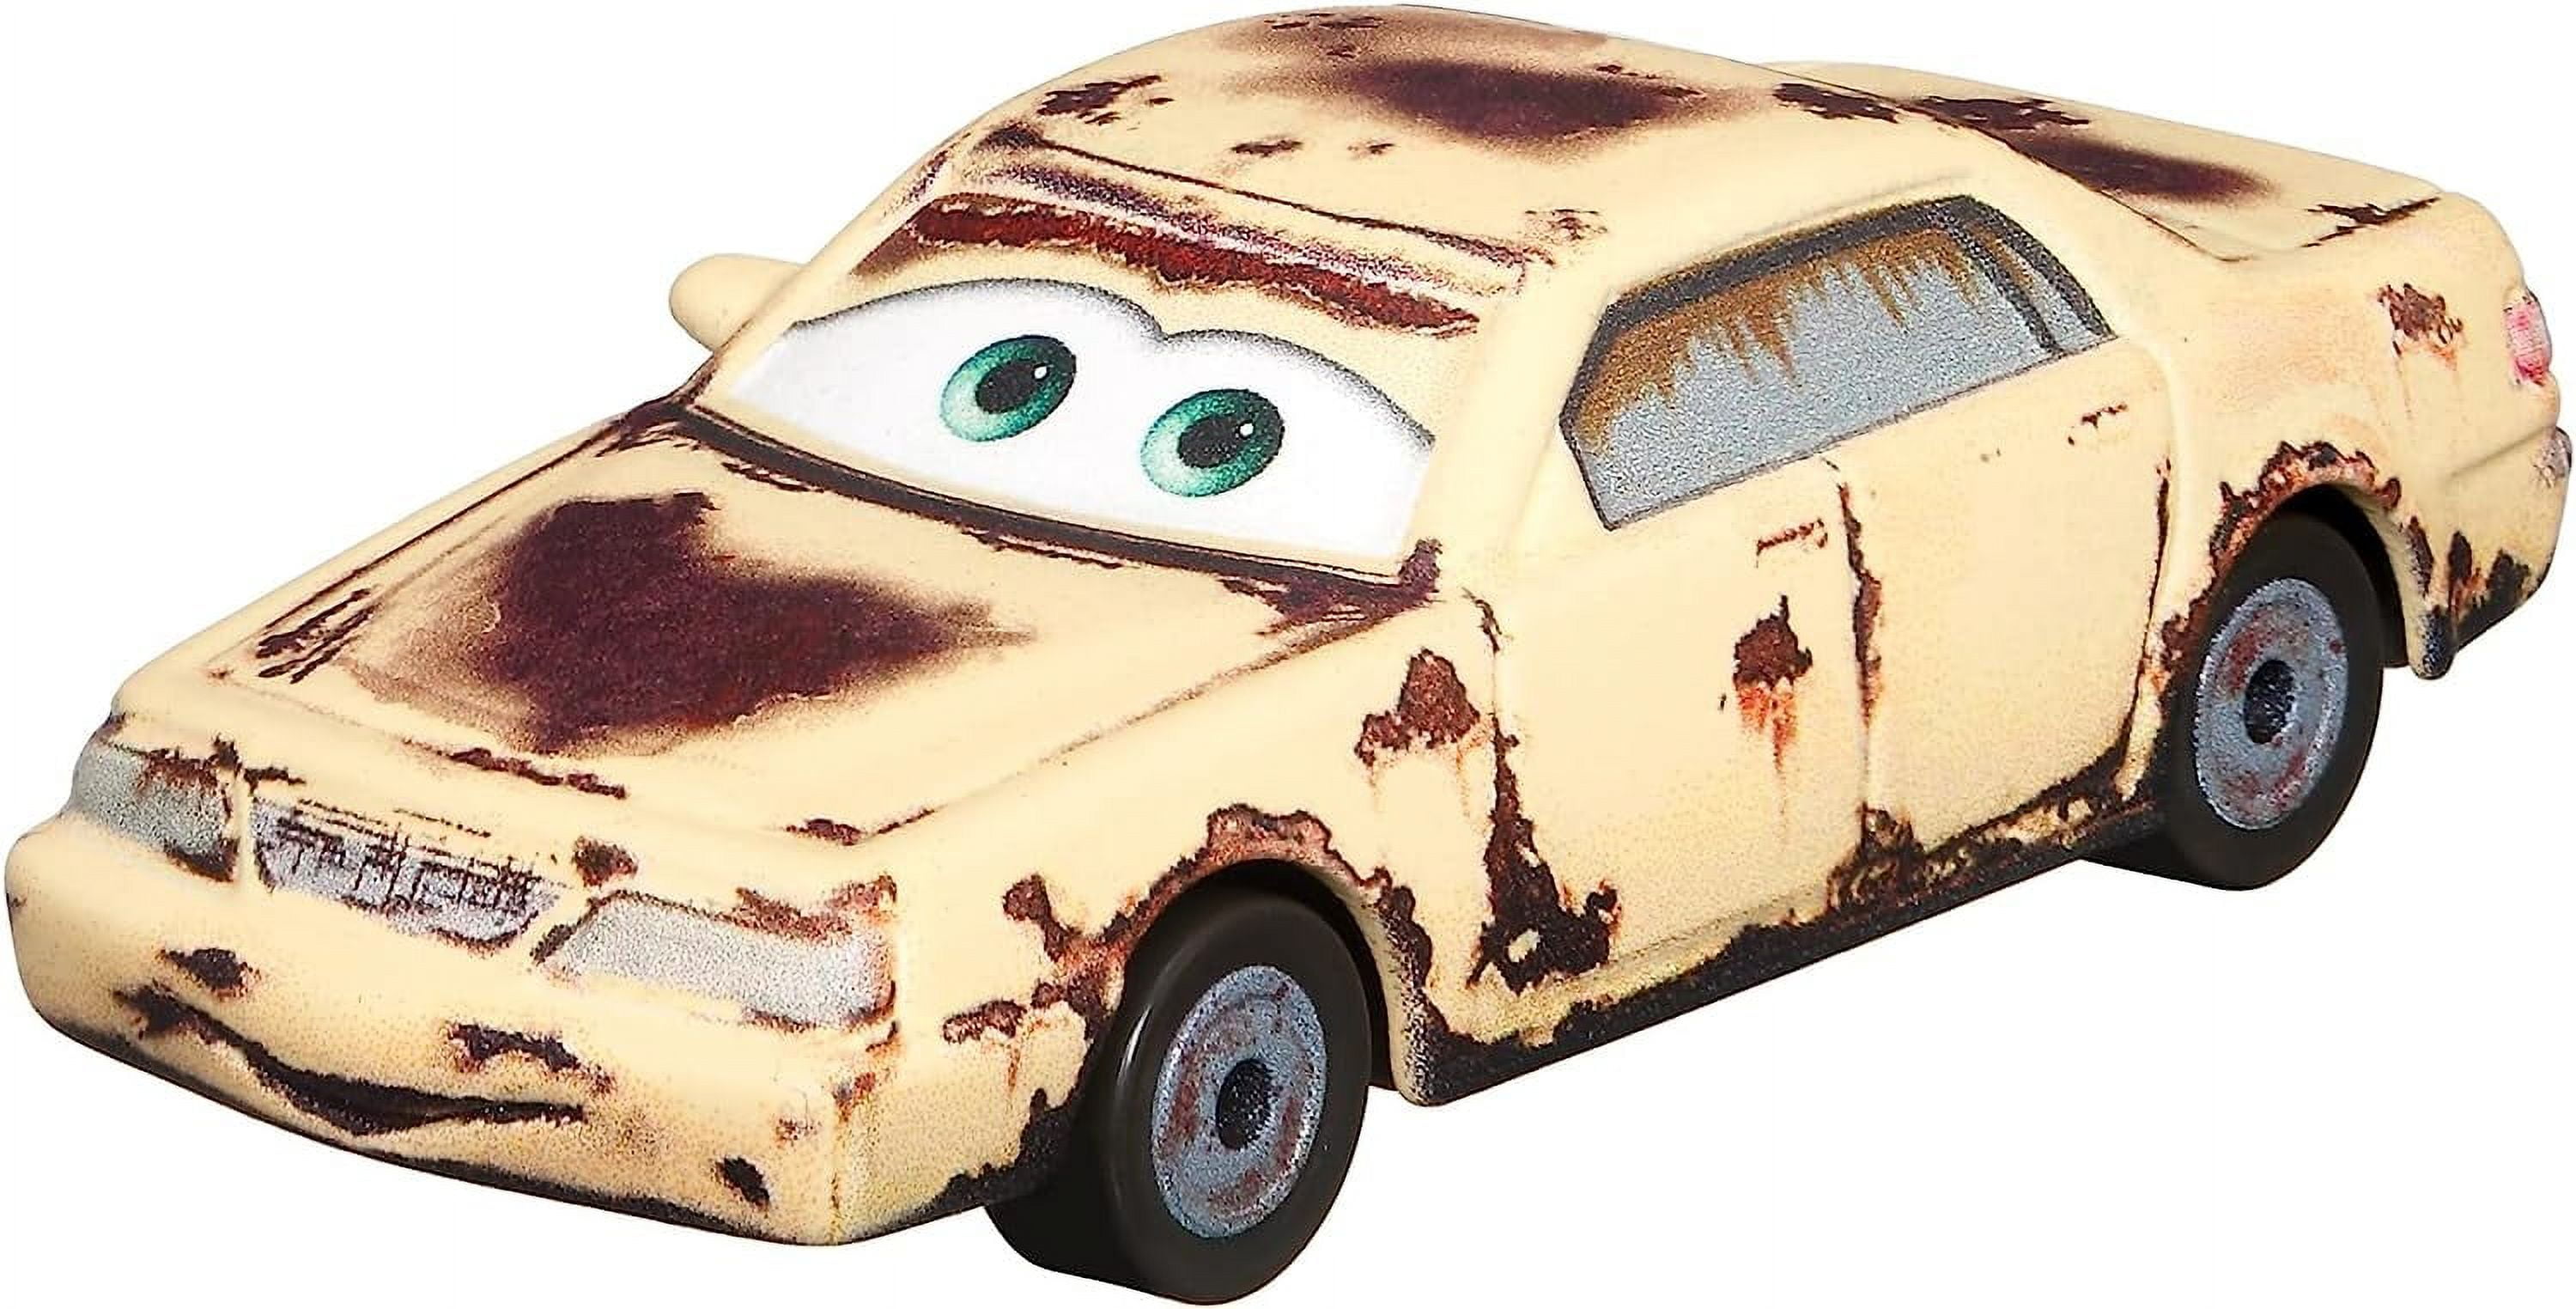 Disney Pixar Cars 3 - Donna Pitts Metal Edition